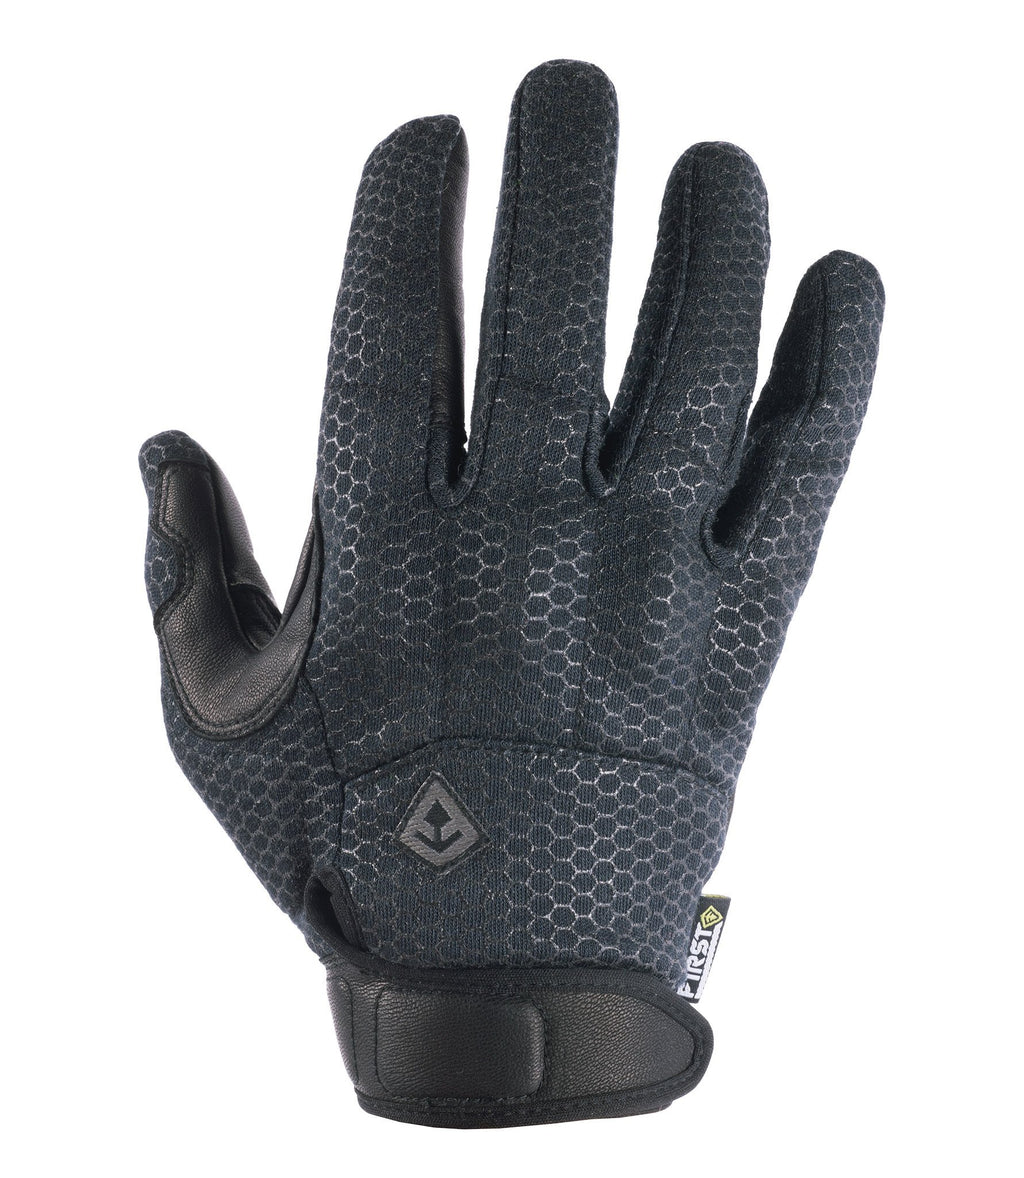 SAFE HANDLER Tough Pro Grip Gloves  Knuckle Guard, Thick Protection,  Non-Slip Rough Grip, L/XL : : Tools & Home Improvement